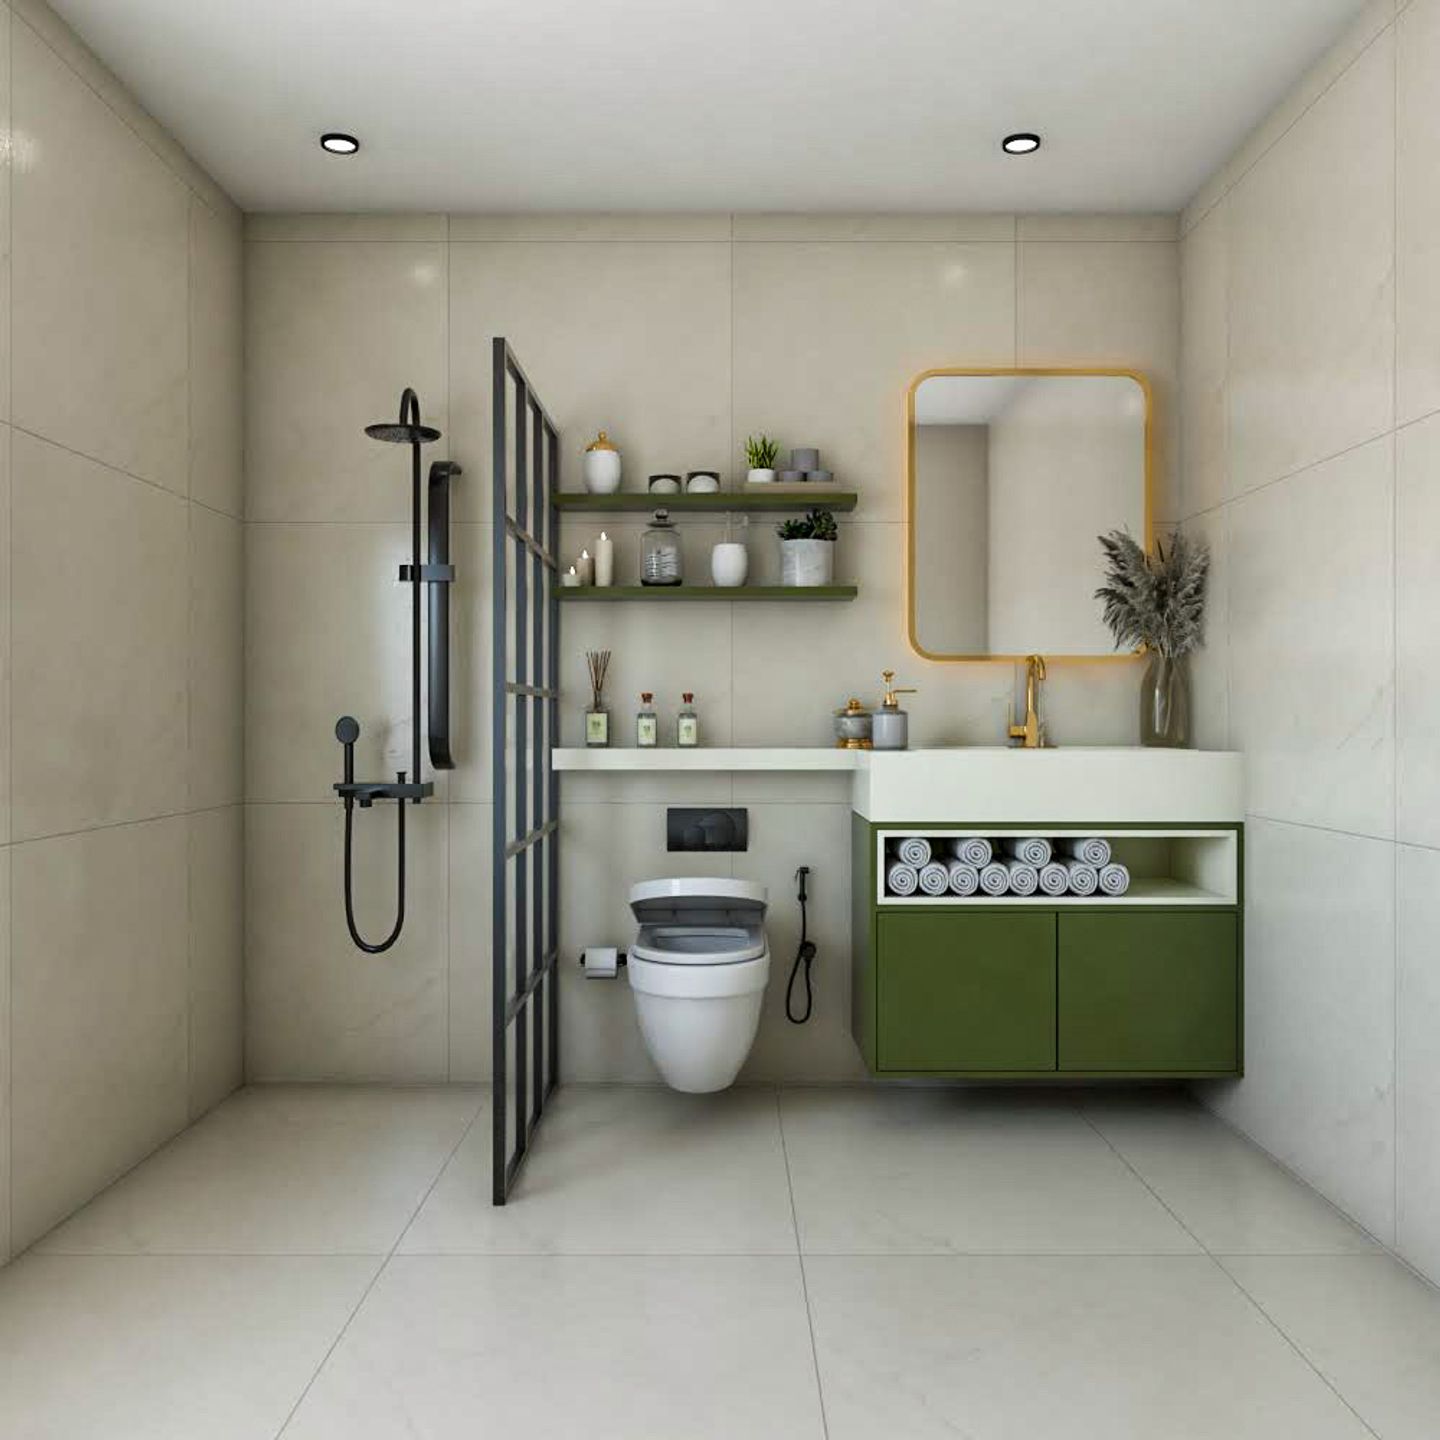 Bathroom Design With Overhead Ledges - Livspace